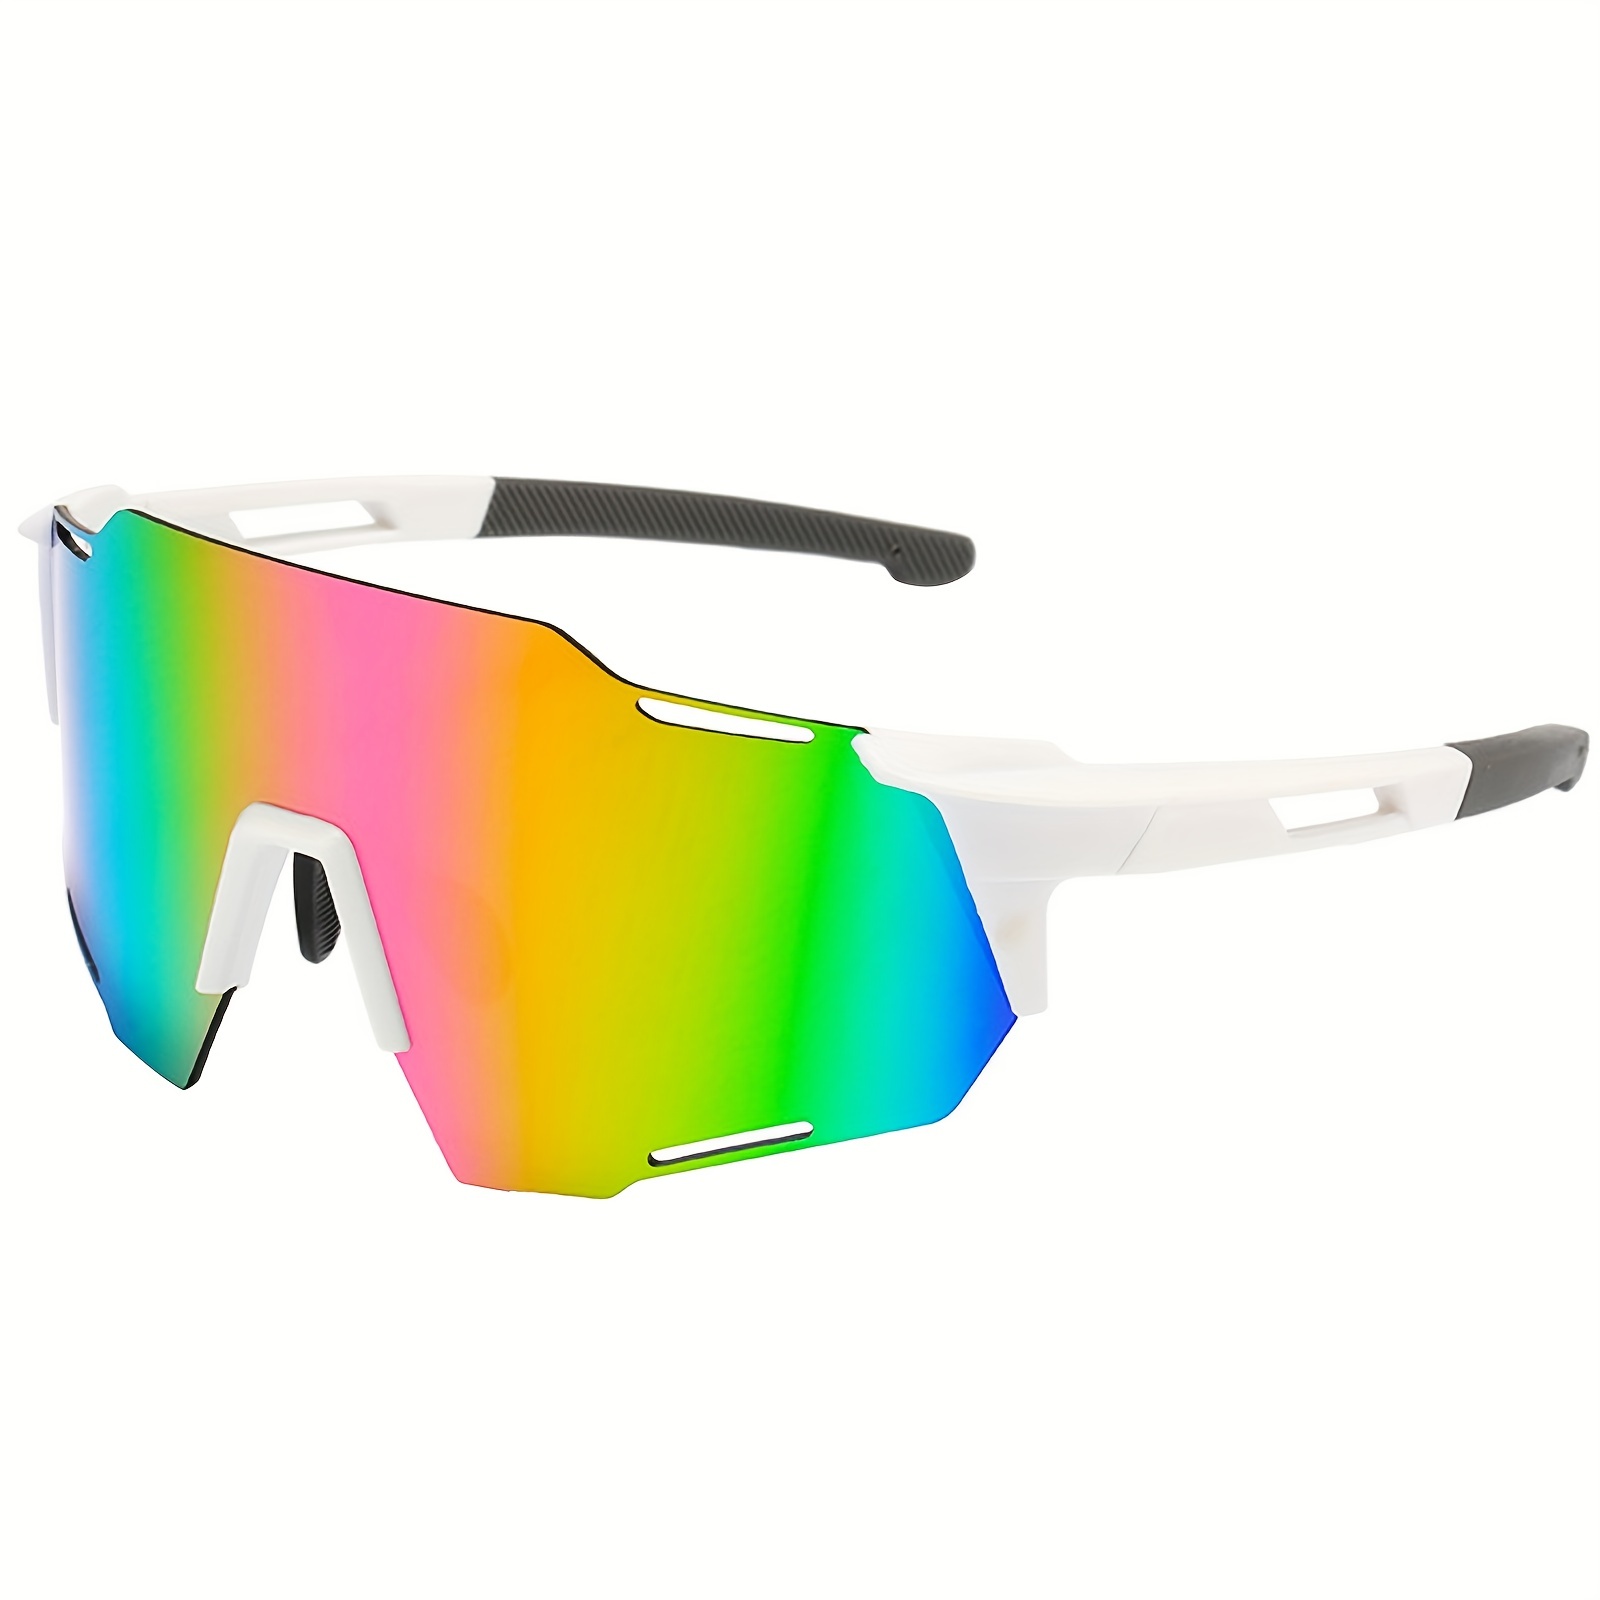 Cycling GlassesFor Men Women - Polarized Sports Glasses, Baseball Glasses Goggles